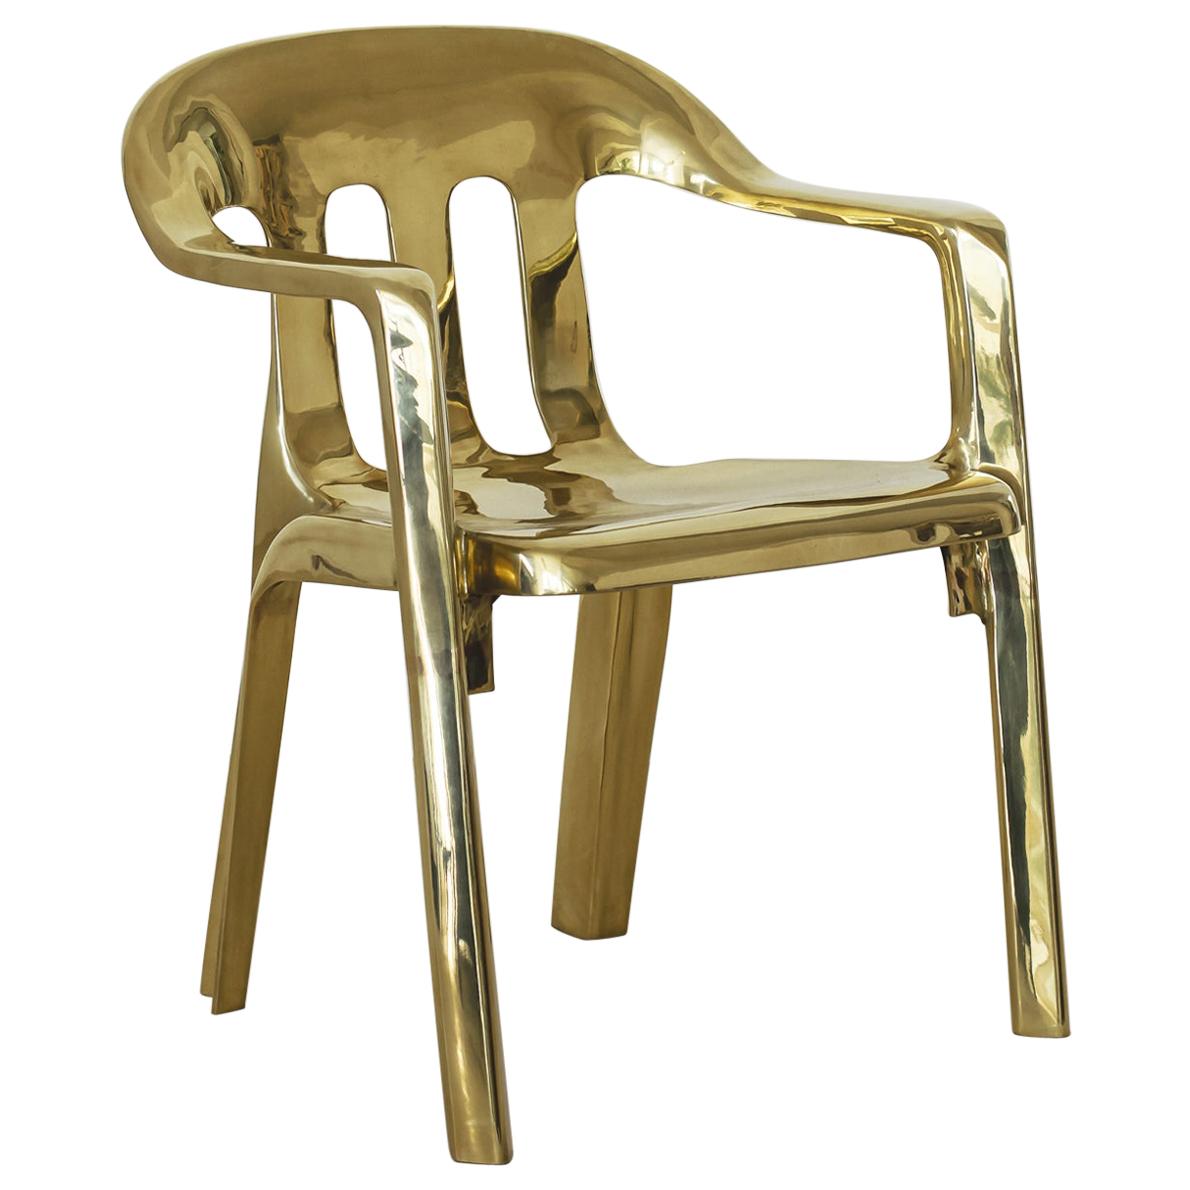 "Monobloco" Contemporary Sculptural Chair in Cast Brass by Estudio Orth